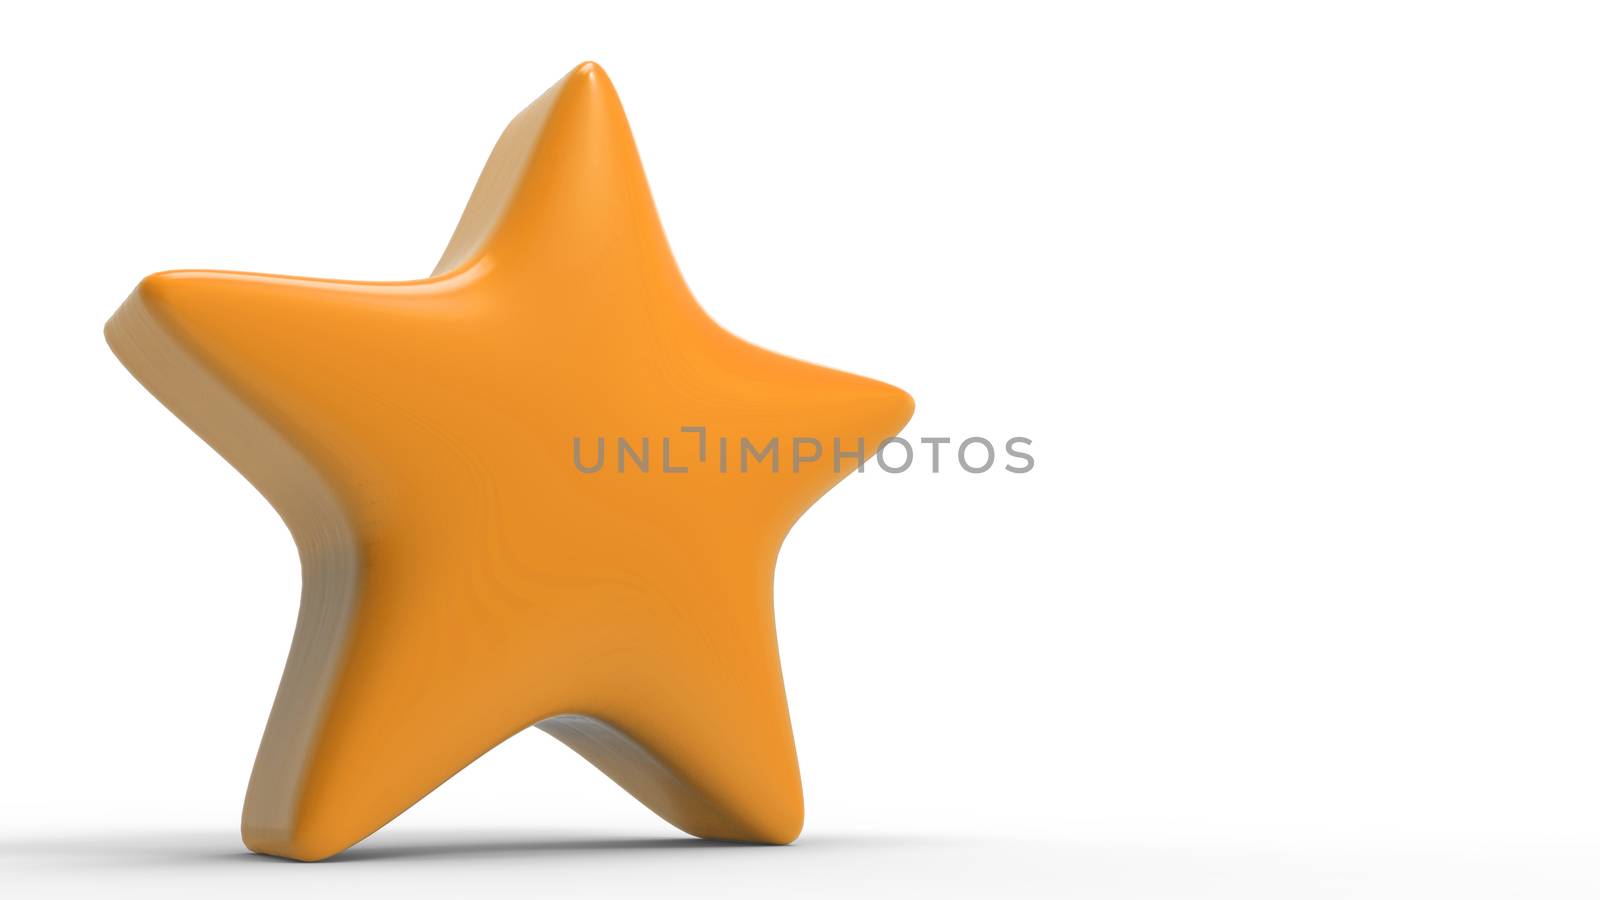 3d orange star on color background. Render and illustration of golden star for premium reviews by Andreajk3